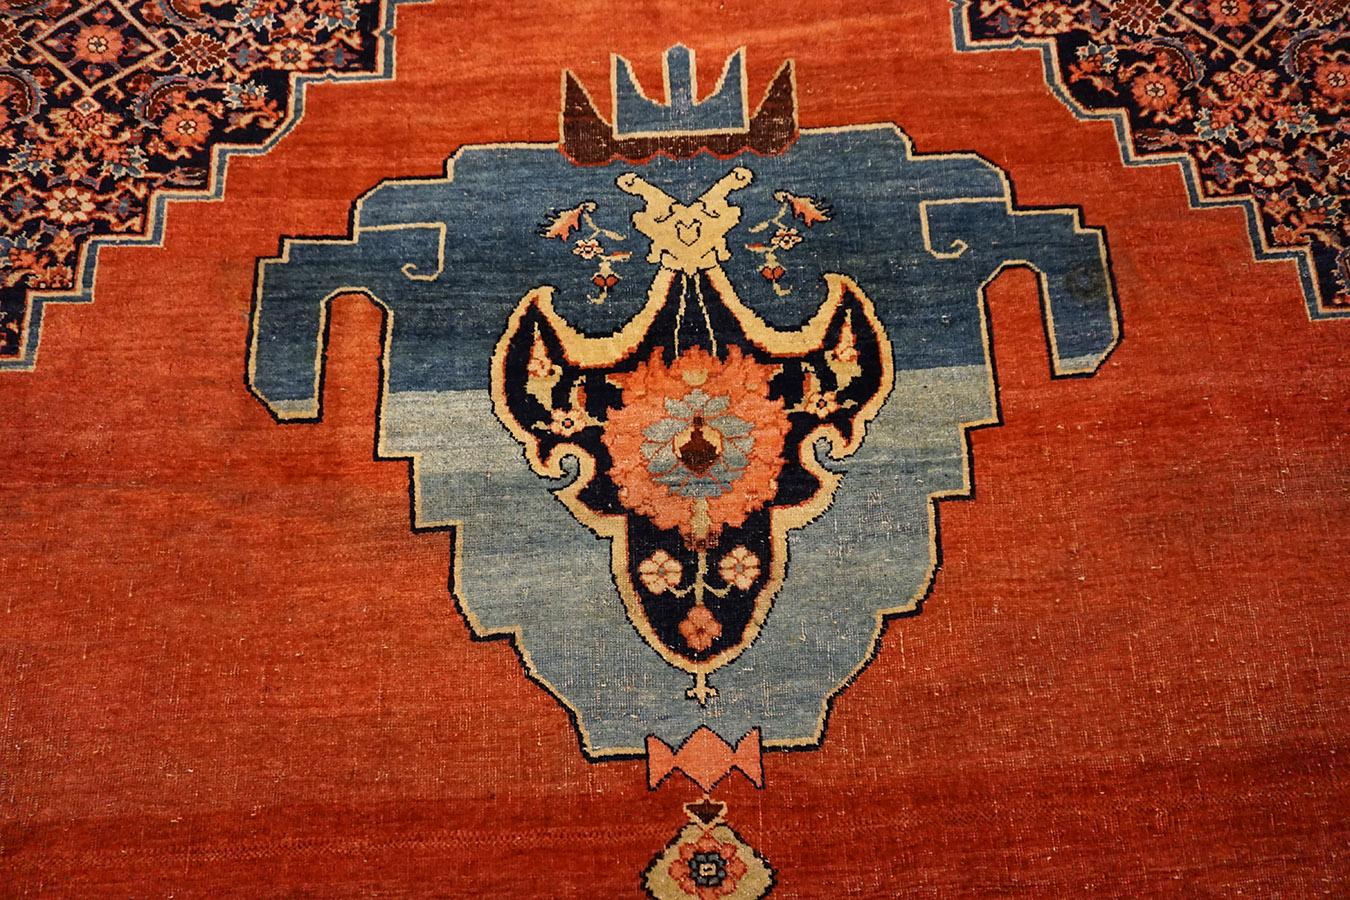 19th Century W. Persian Bijar Carpet  11'3